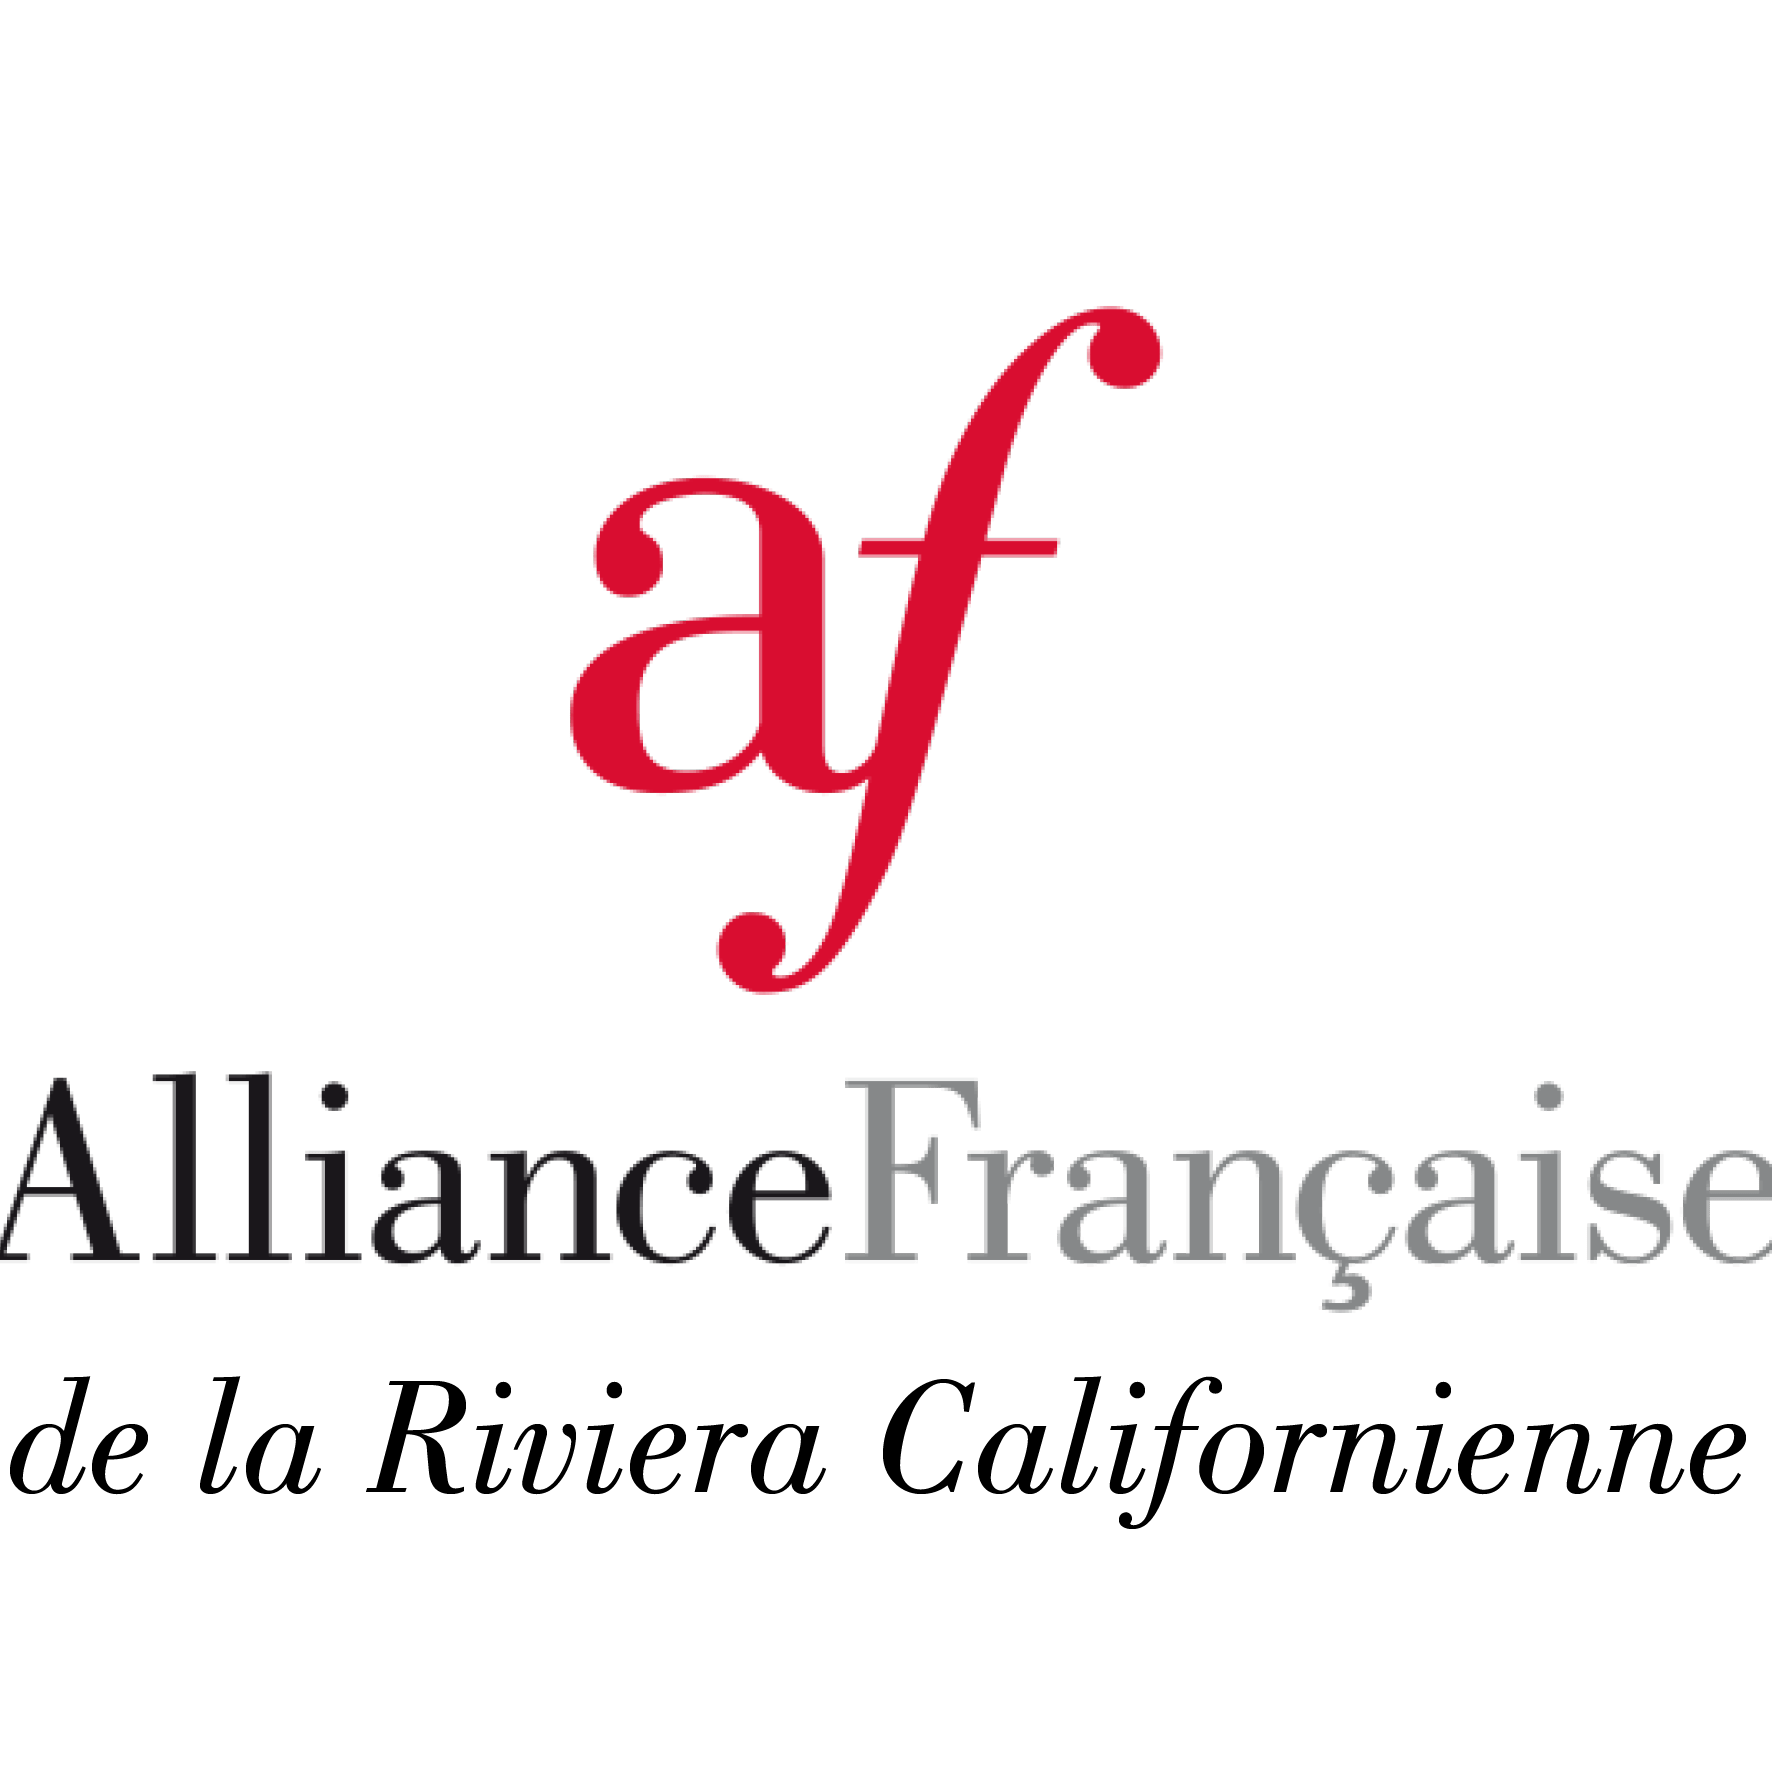 French Speaking Organization in California - Alliance Francaise de la Riviera Californienne